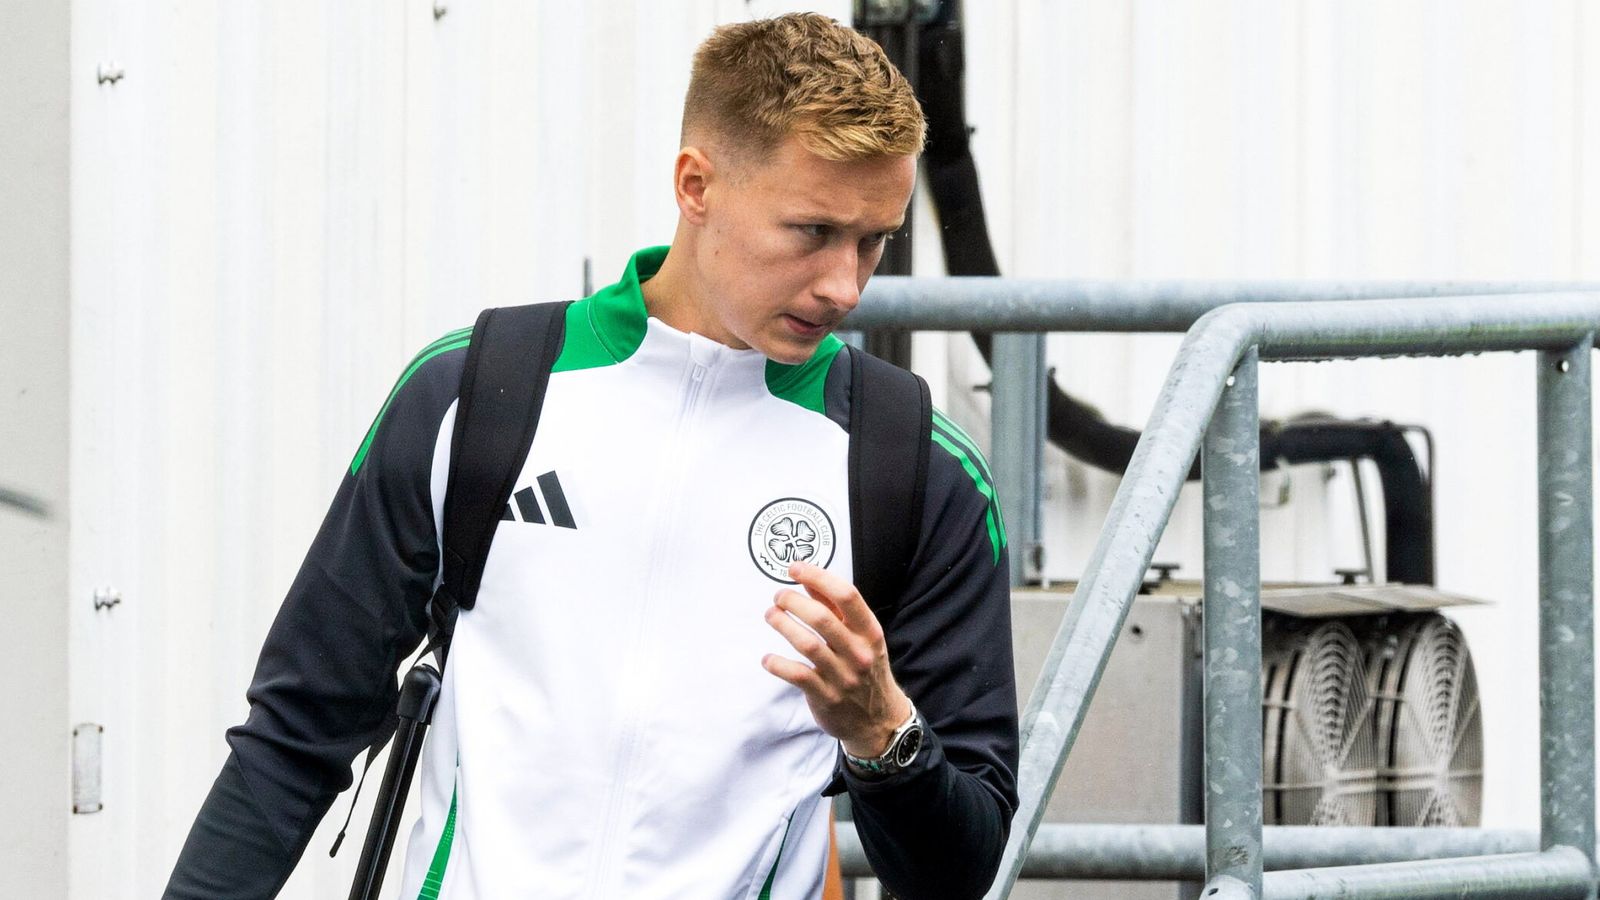 Celtic transfer news: Finland international goalkeeper Viljami Sinisalo joins on five-year deal from Aston Villa